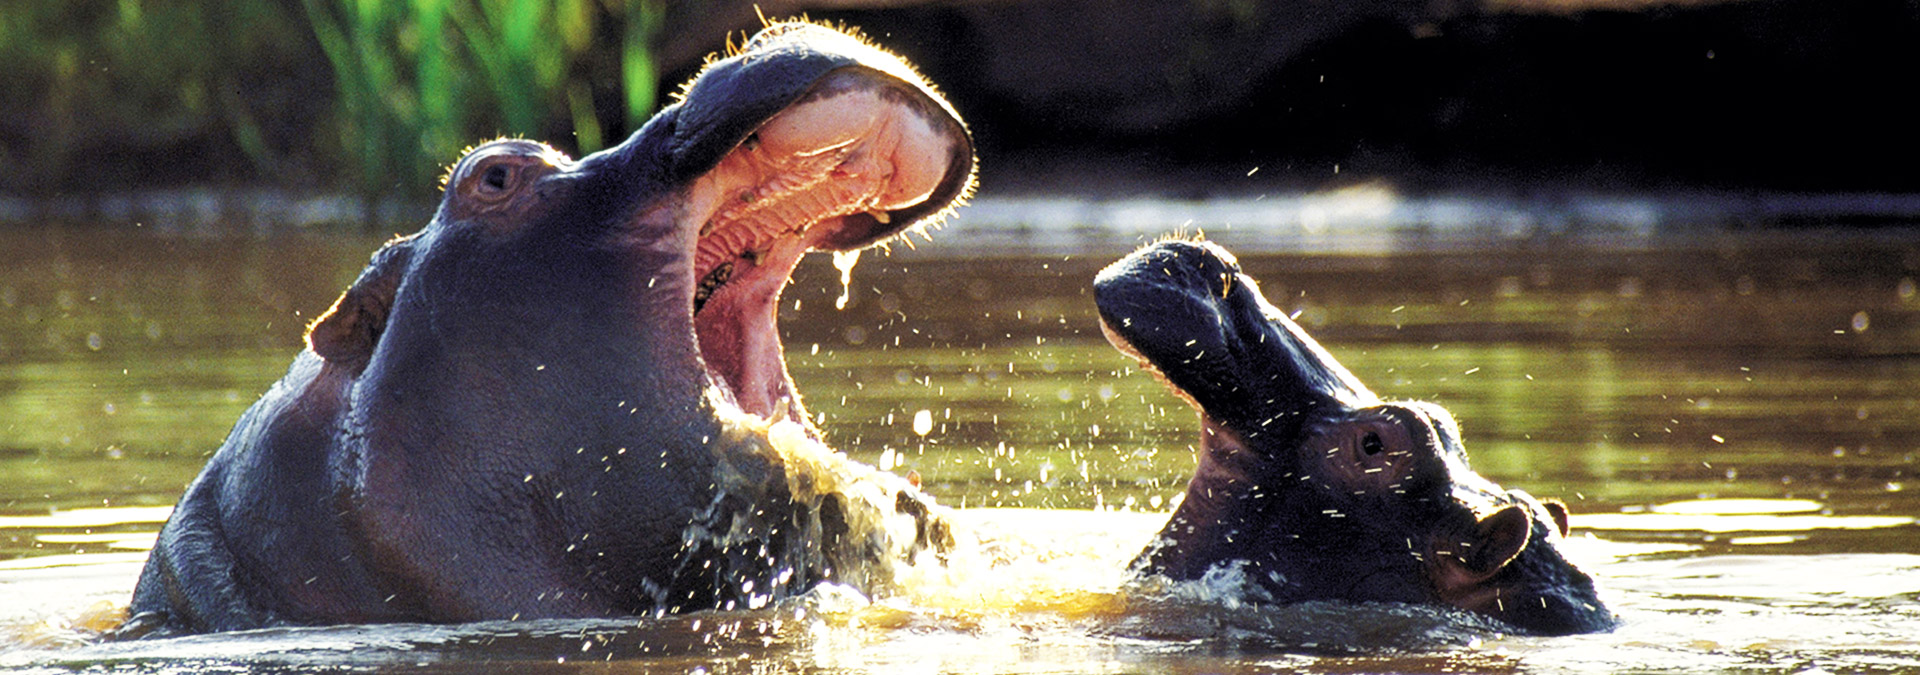 Hippo in Water on Daytime Safari